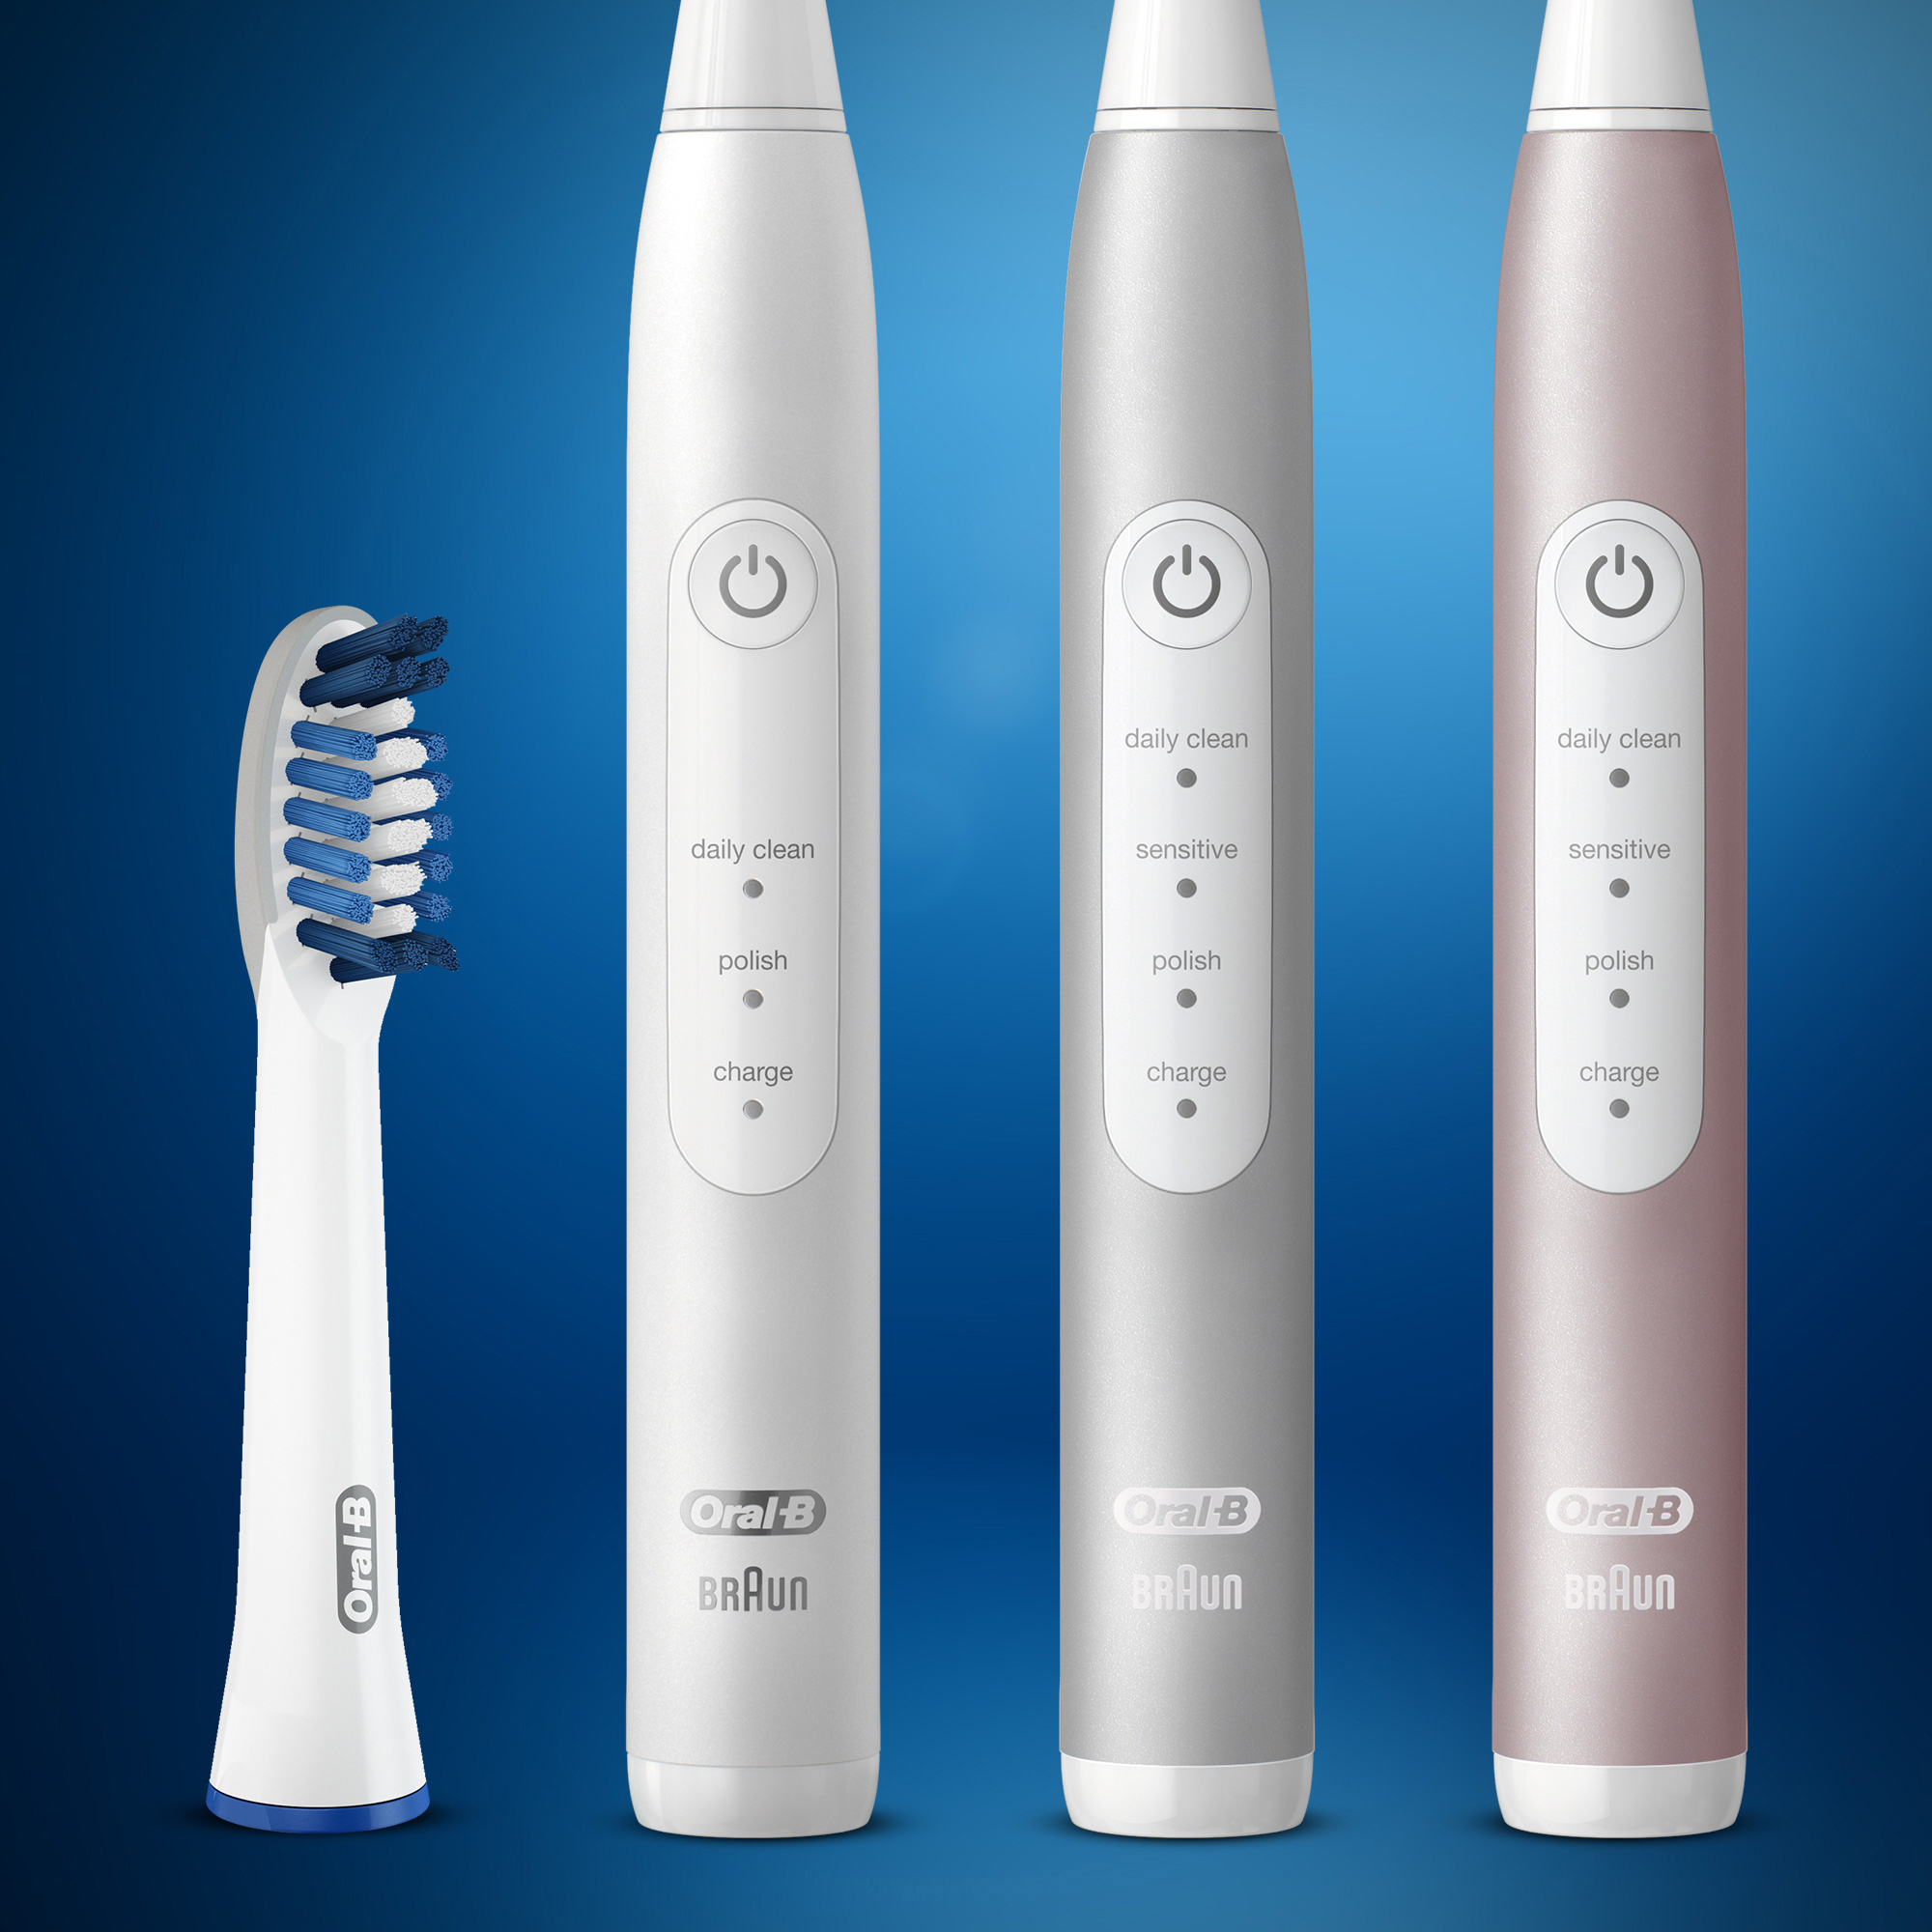 Электрическая зубная щётка Oral-B Pulsonic Slim Luxe 4900 S411.526.3H типа 3717, 2 шт. - фото 11